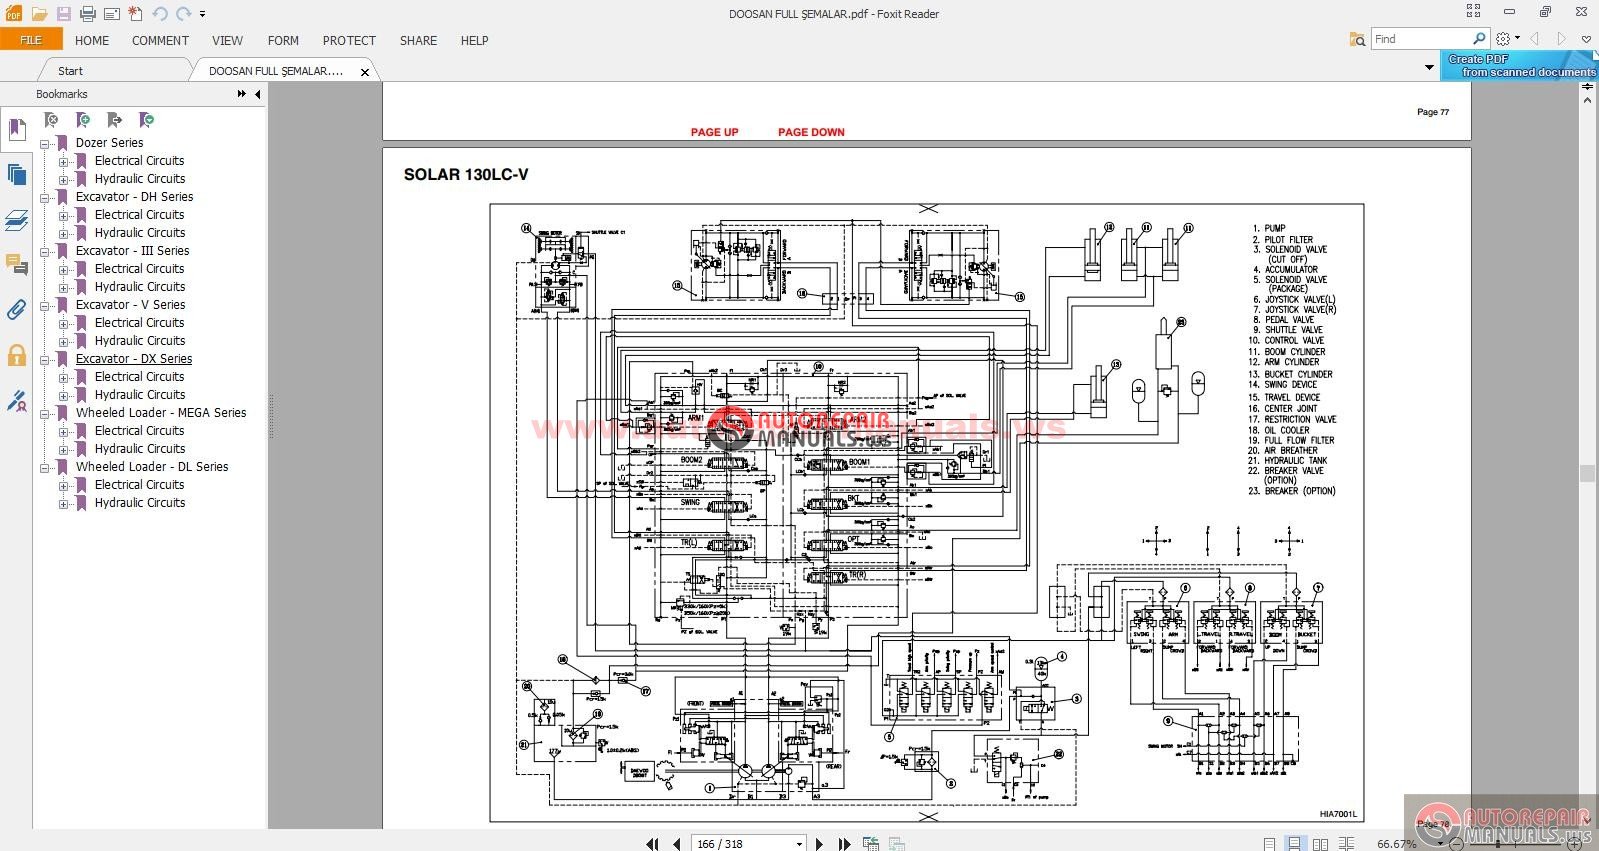 optek fretlight fg 200 wiring diagram